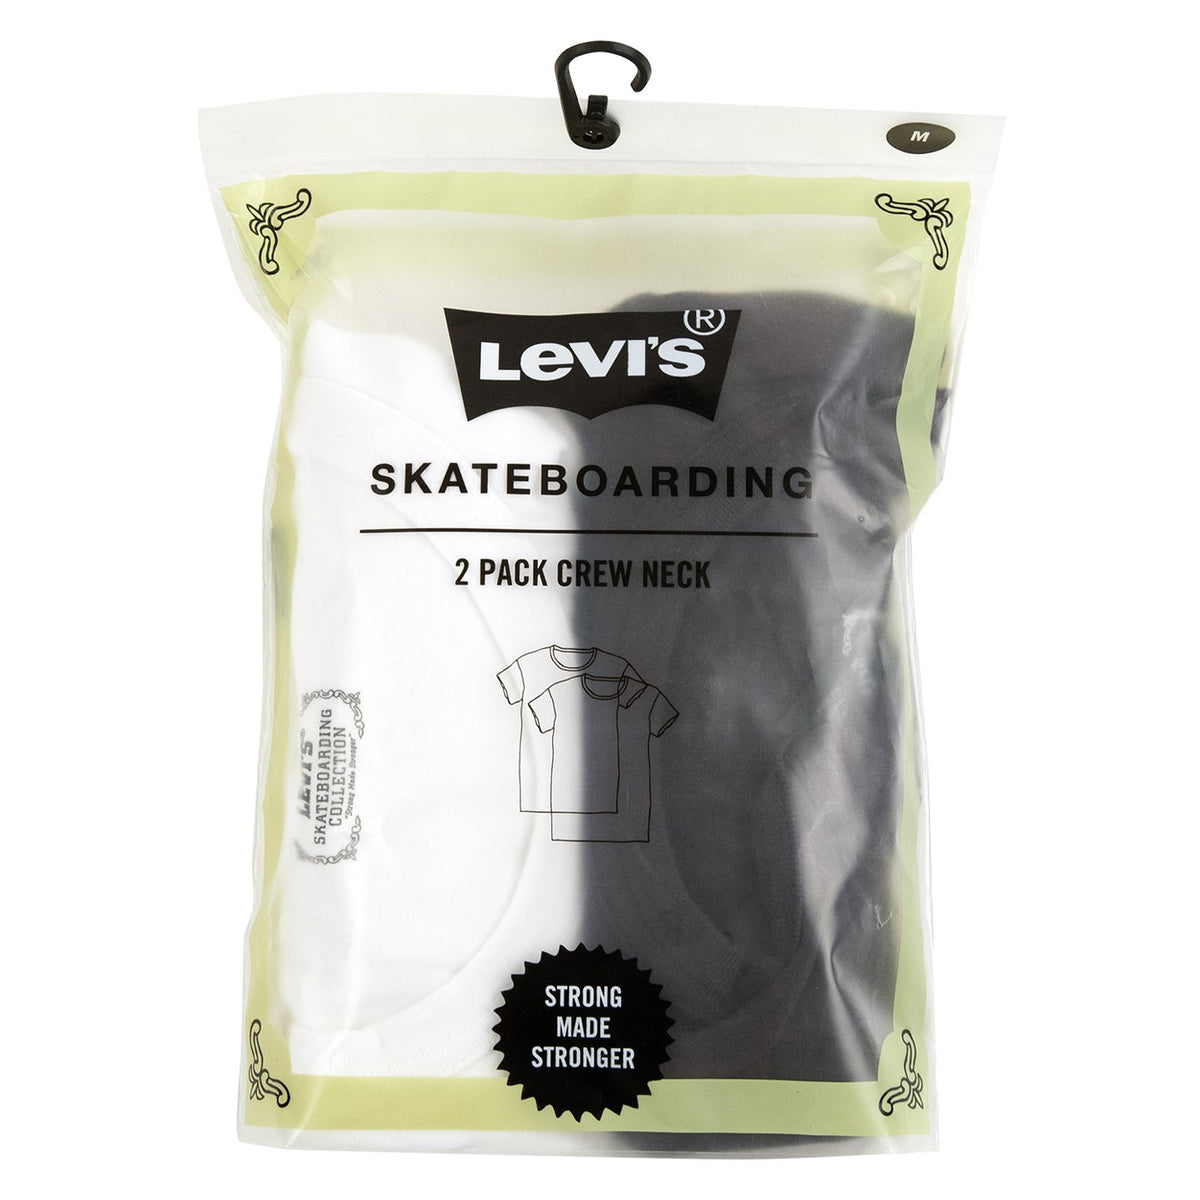 levis skateboarding 2 pack